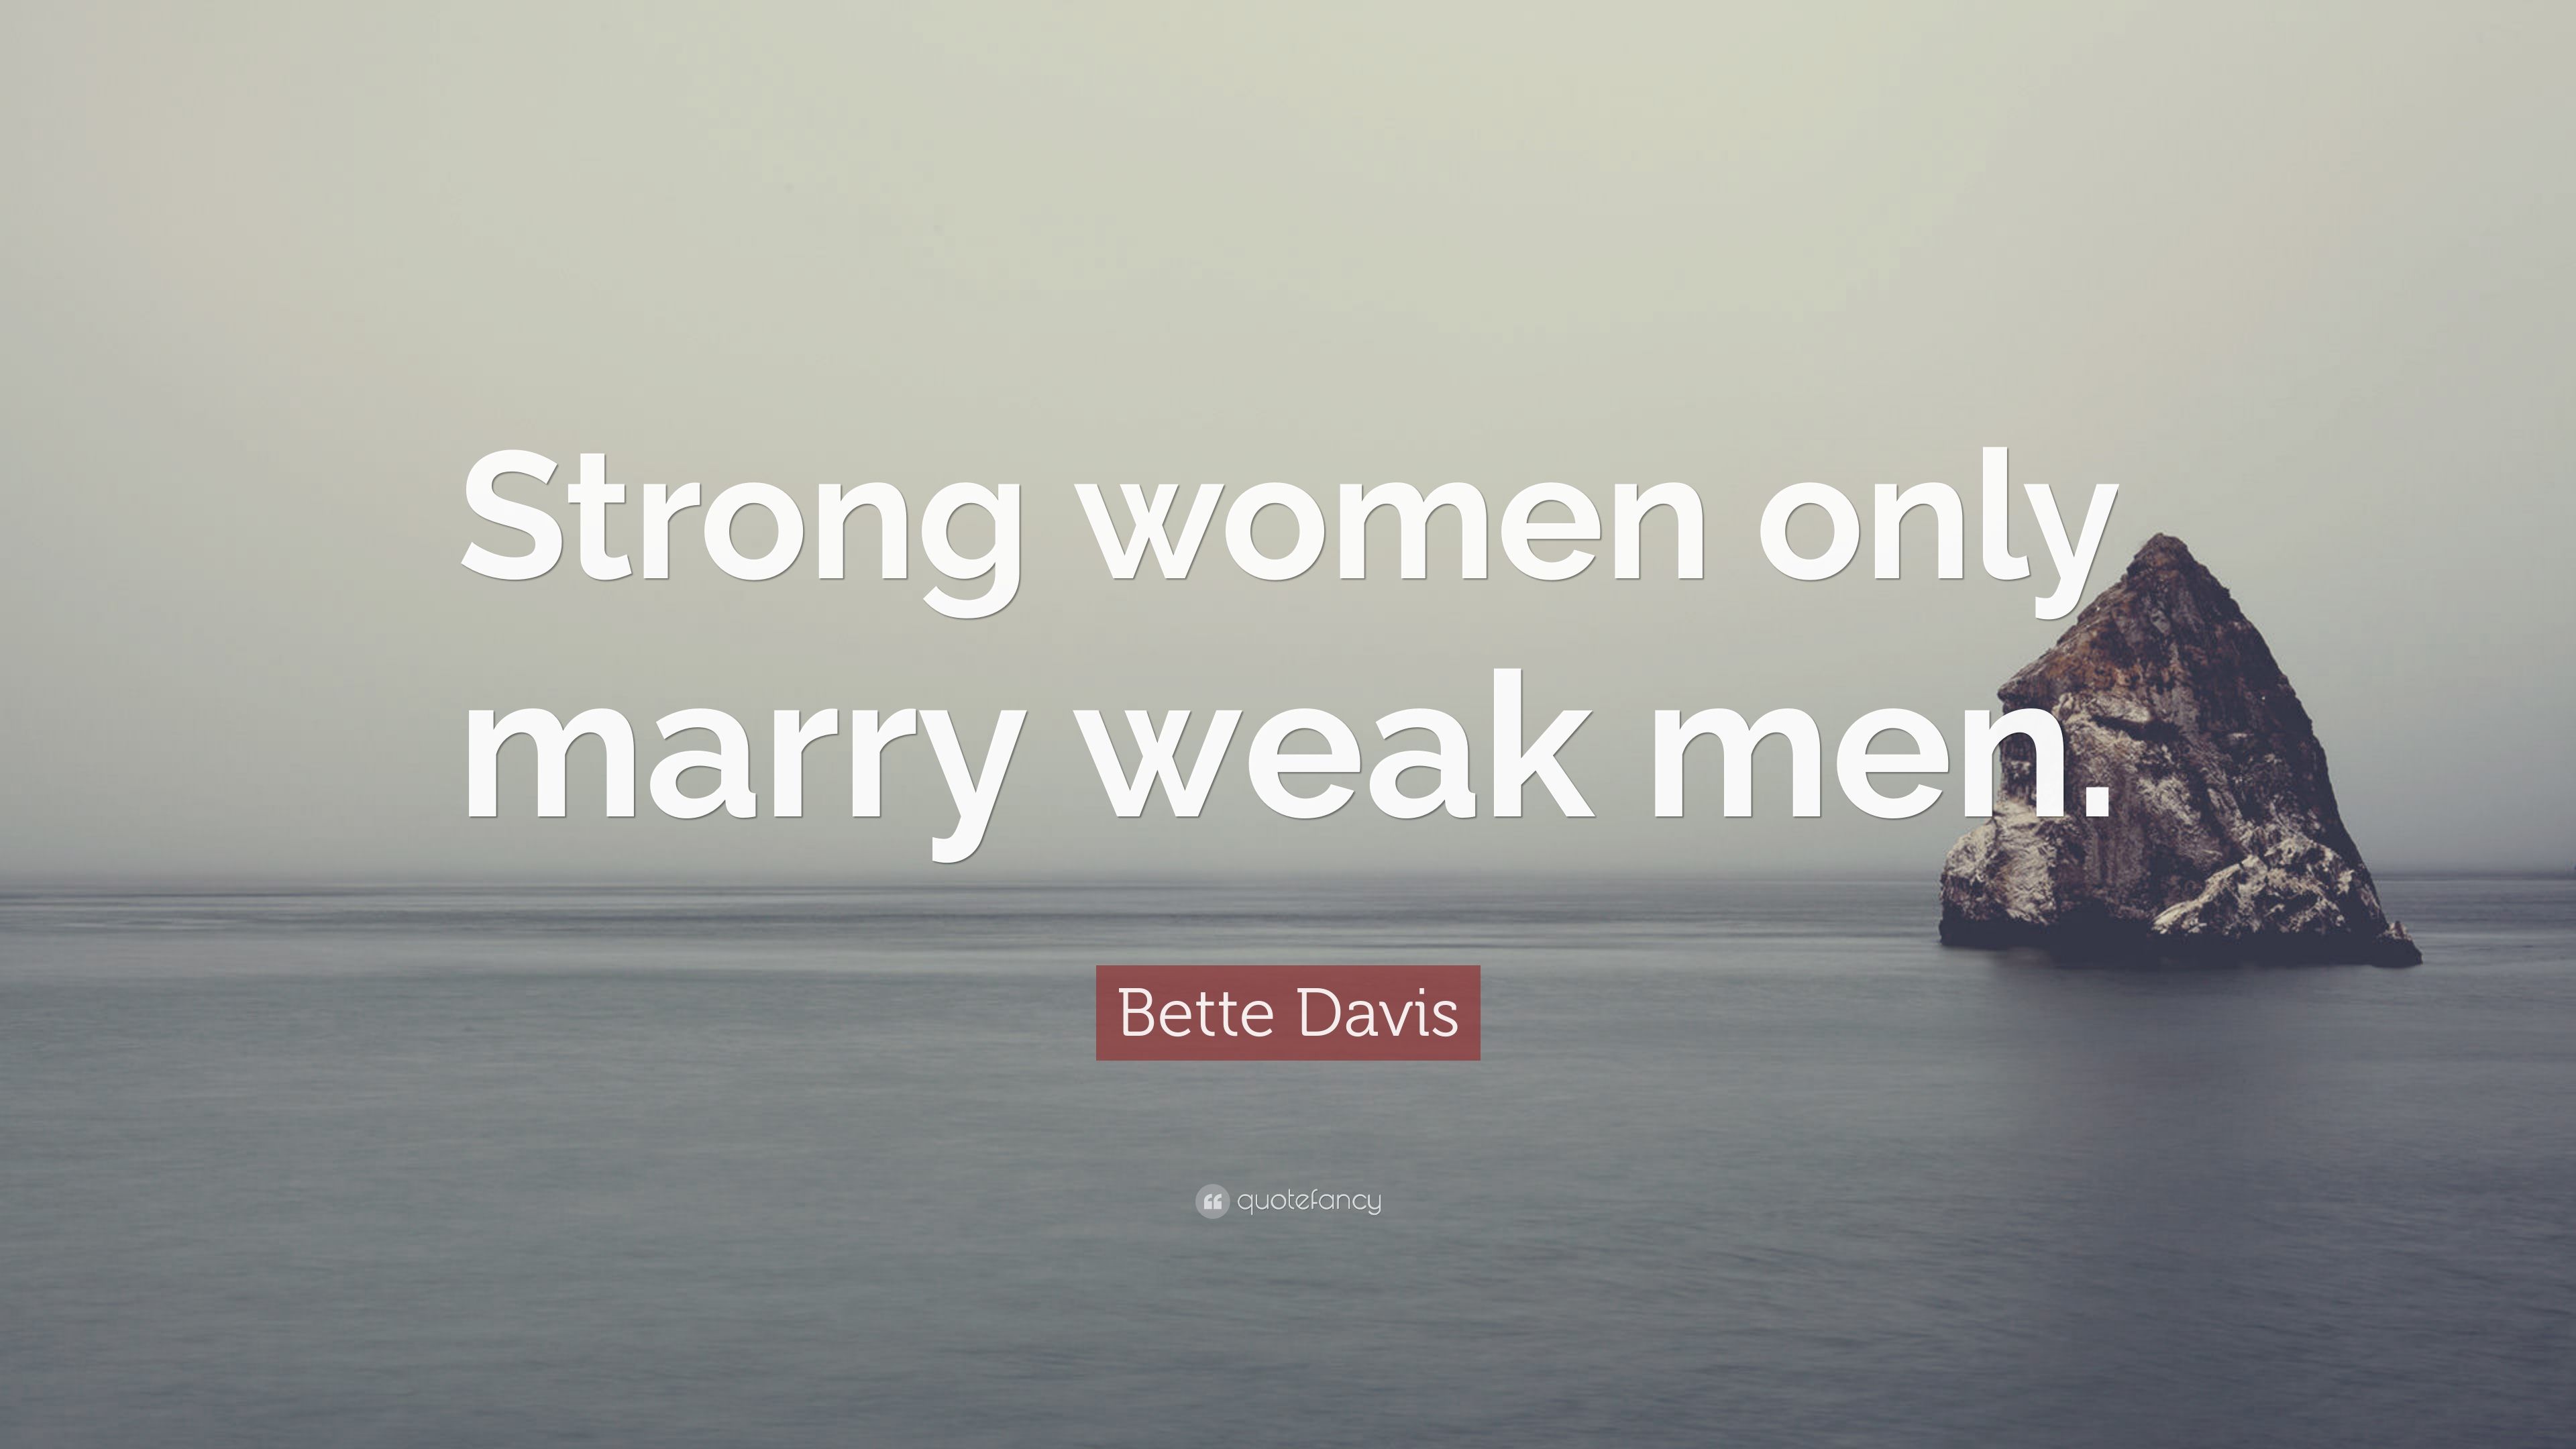 Bette Davis Quote: “Strong women only marry weak men.” 10